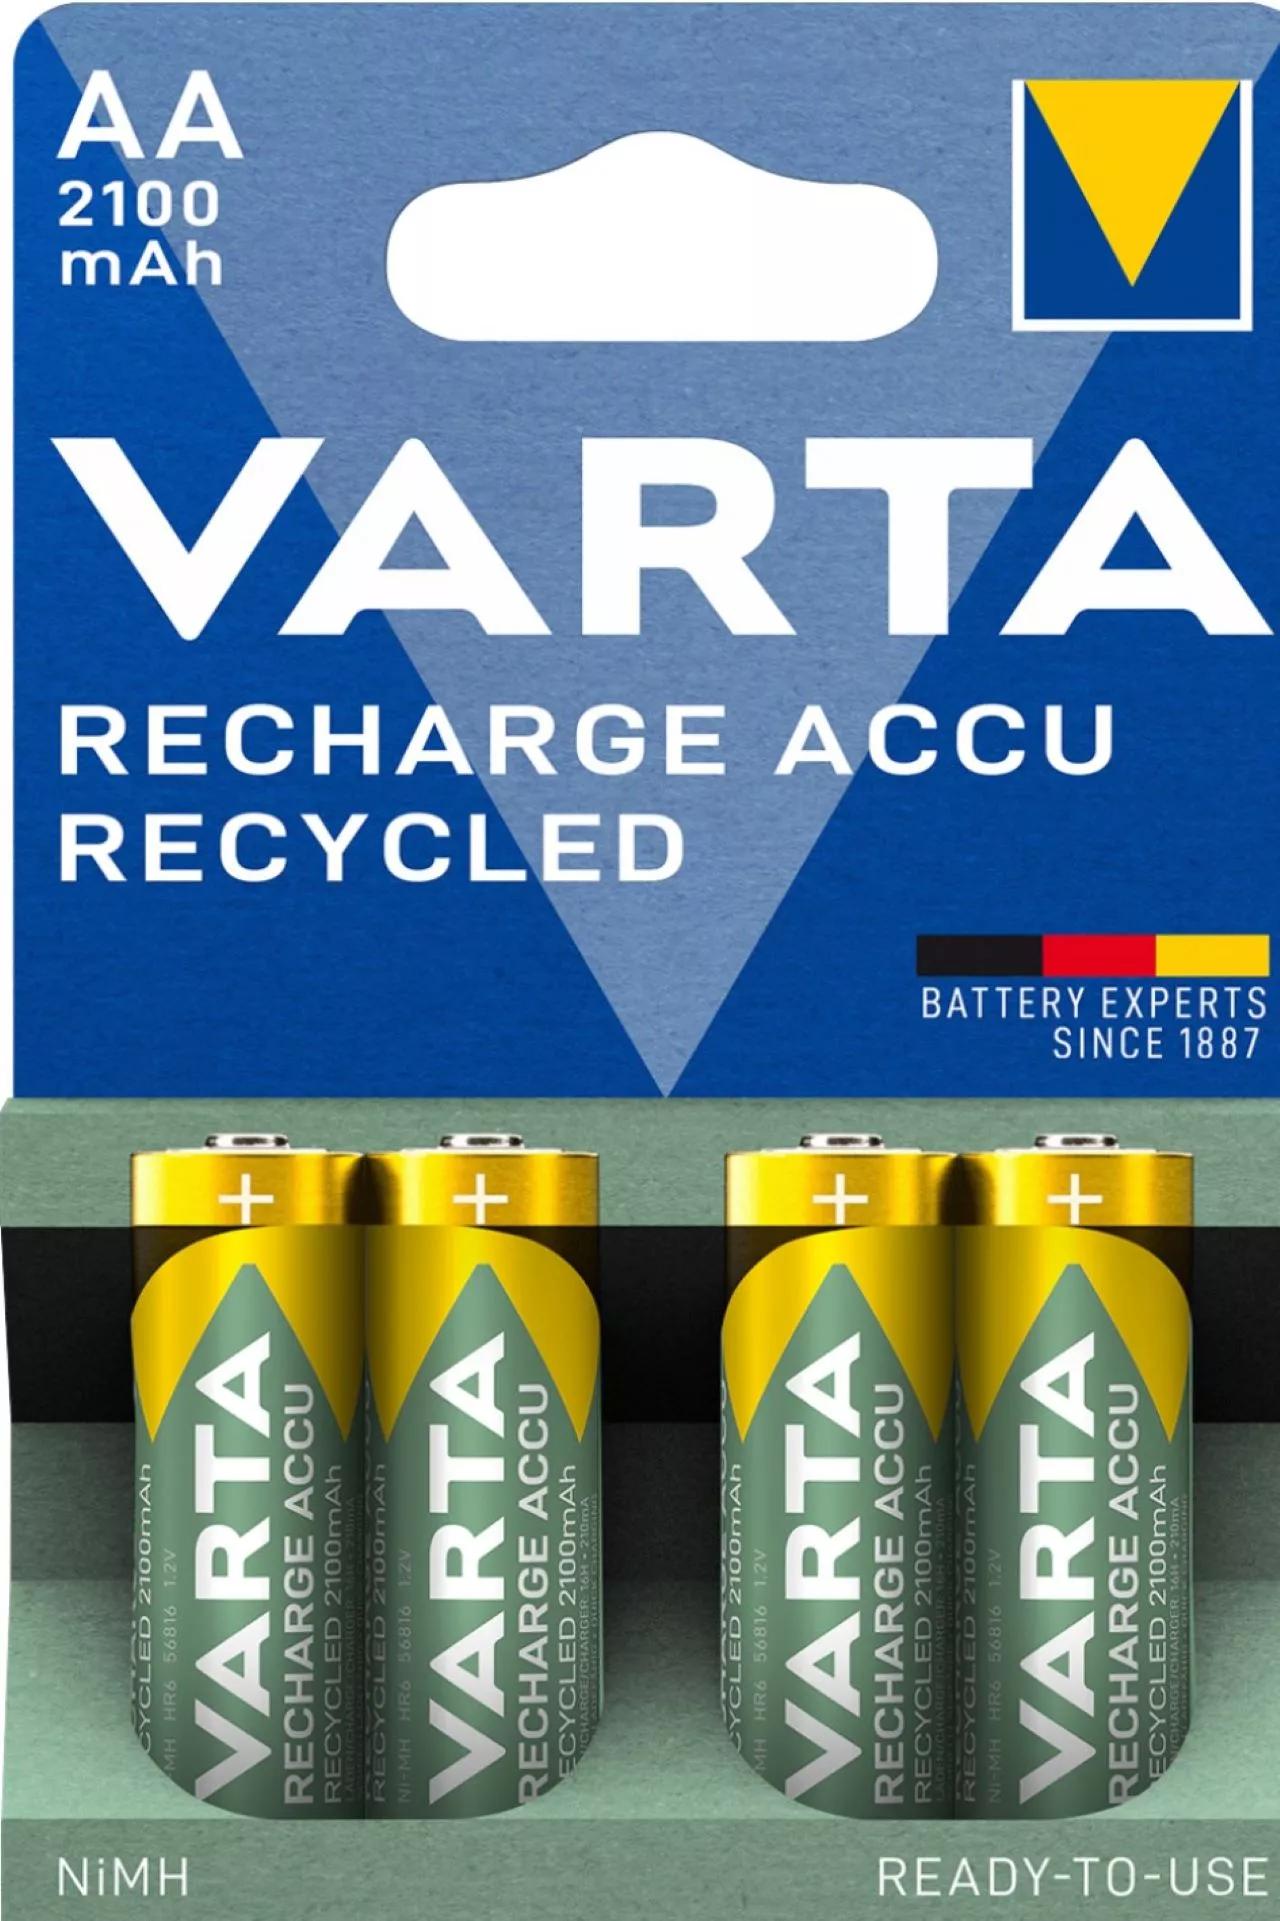 Varta Powerbank - Recharge Recycled - AA baterijen - main product image